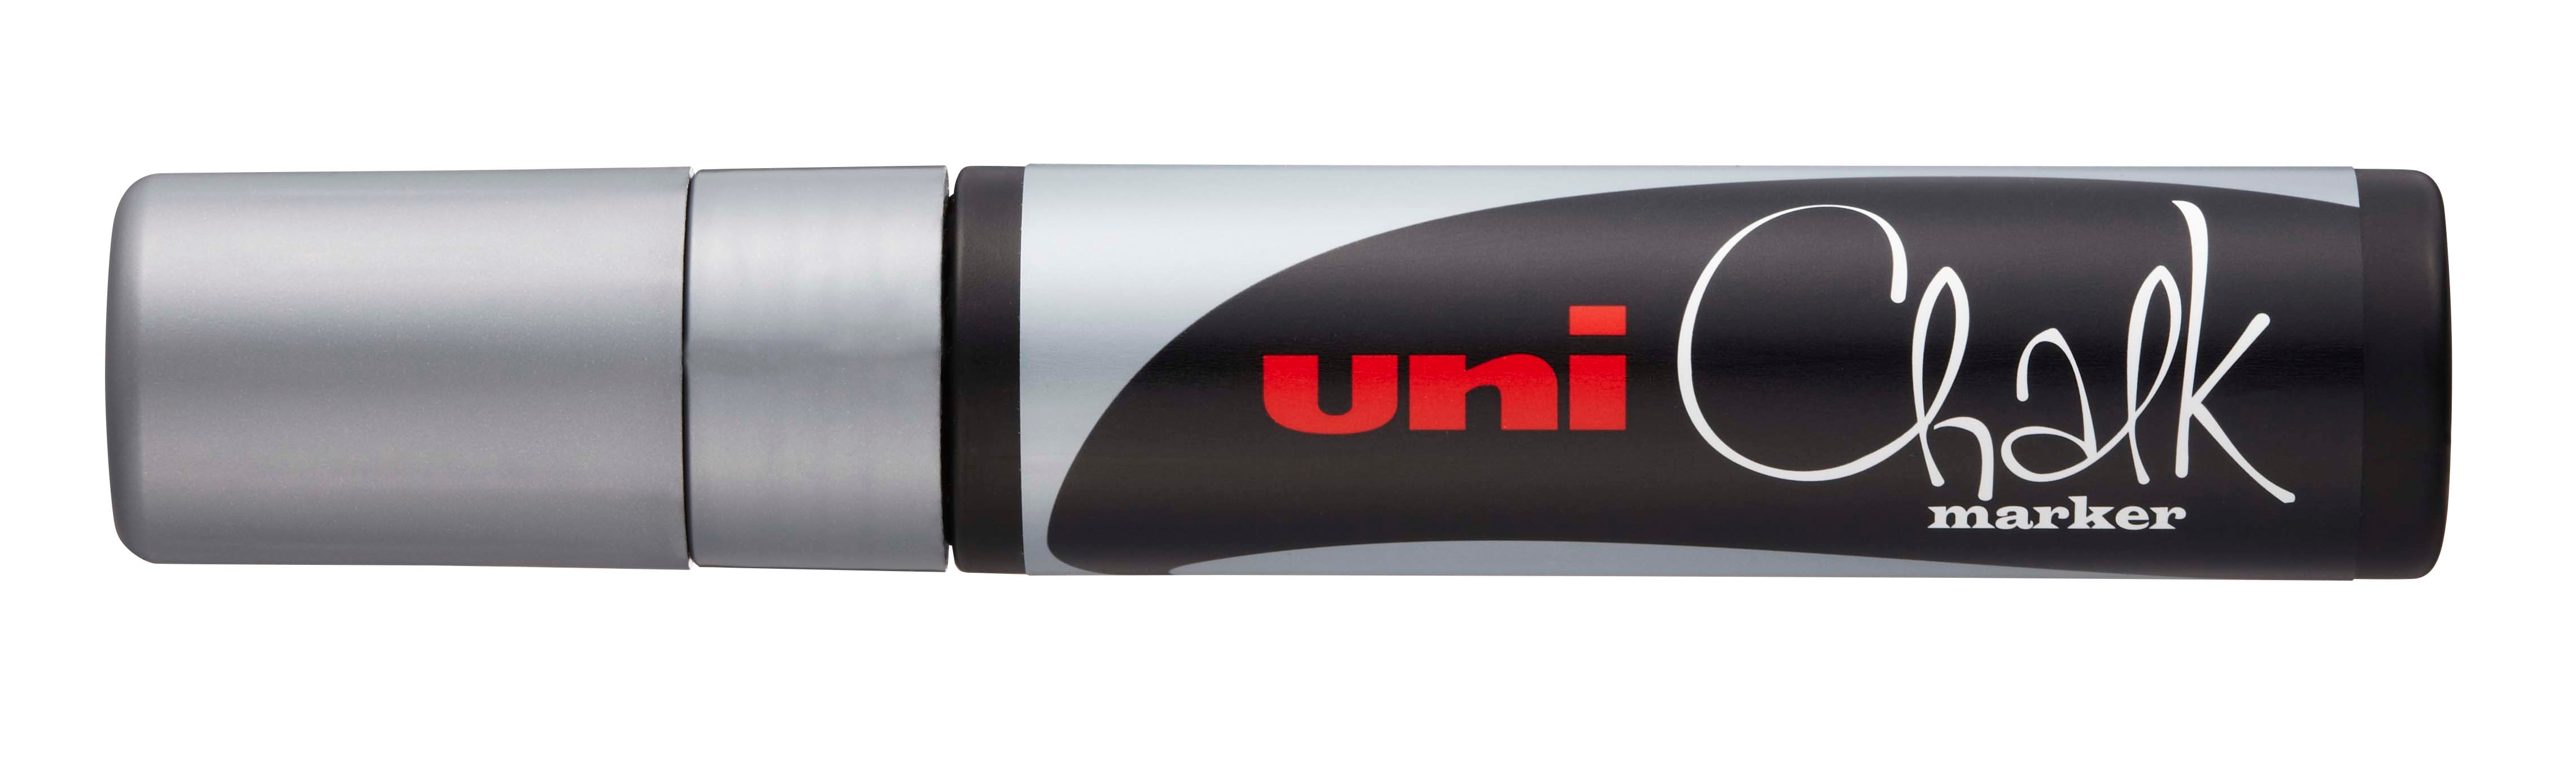 UNI-BALL Chalk Marker 15mm PWE17K SILVE argent argent